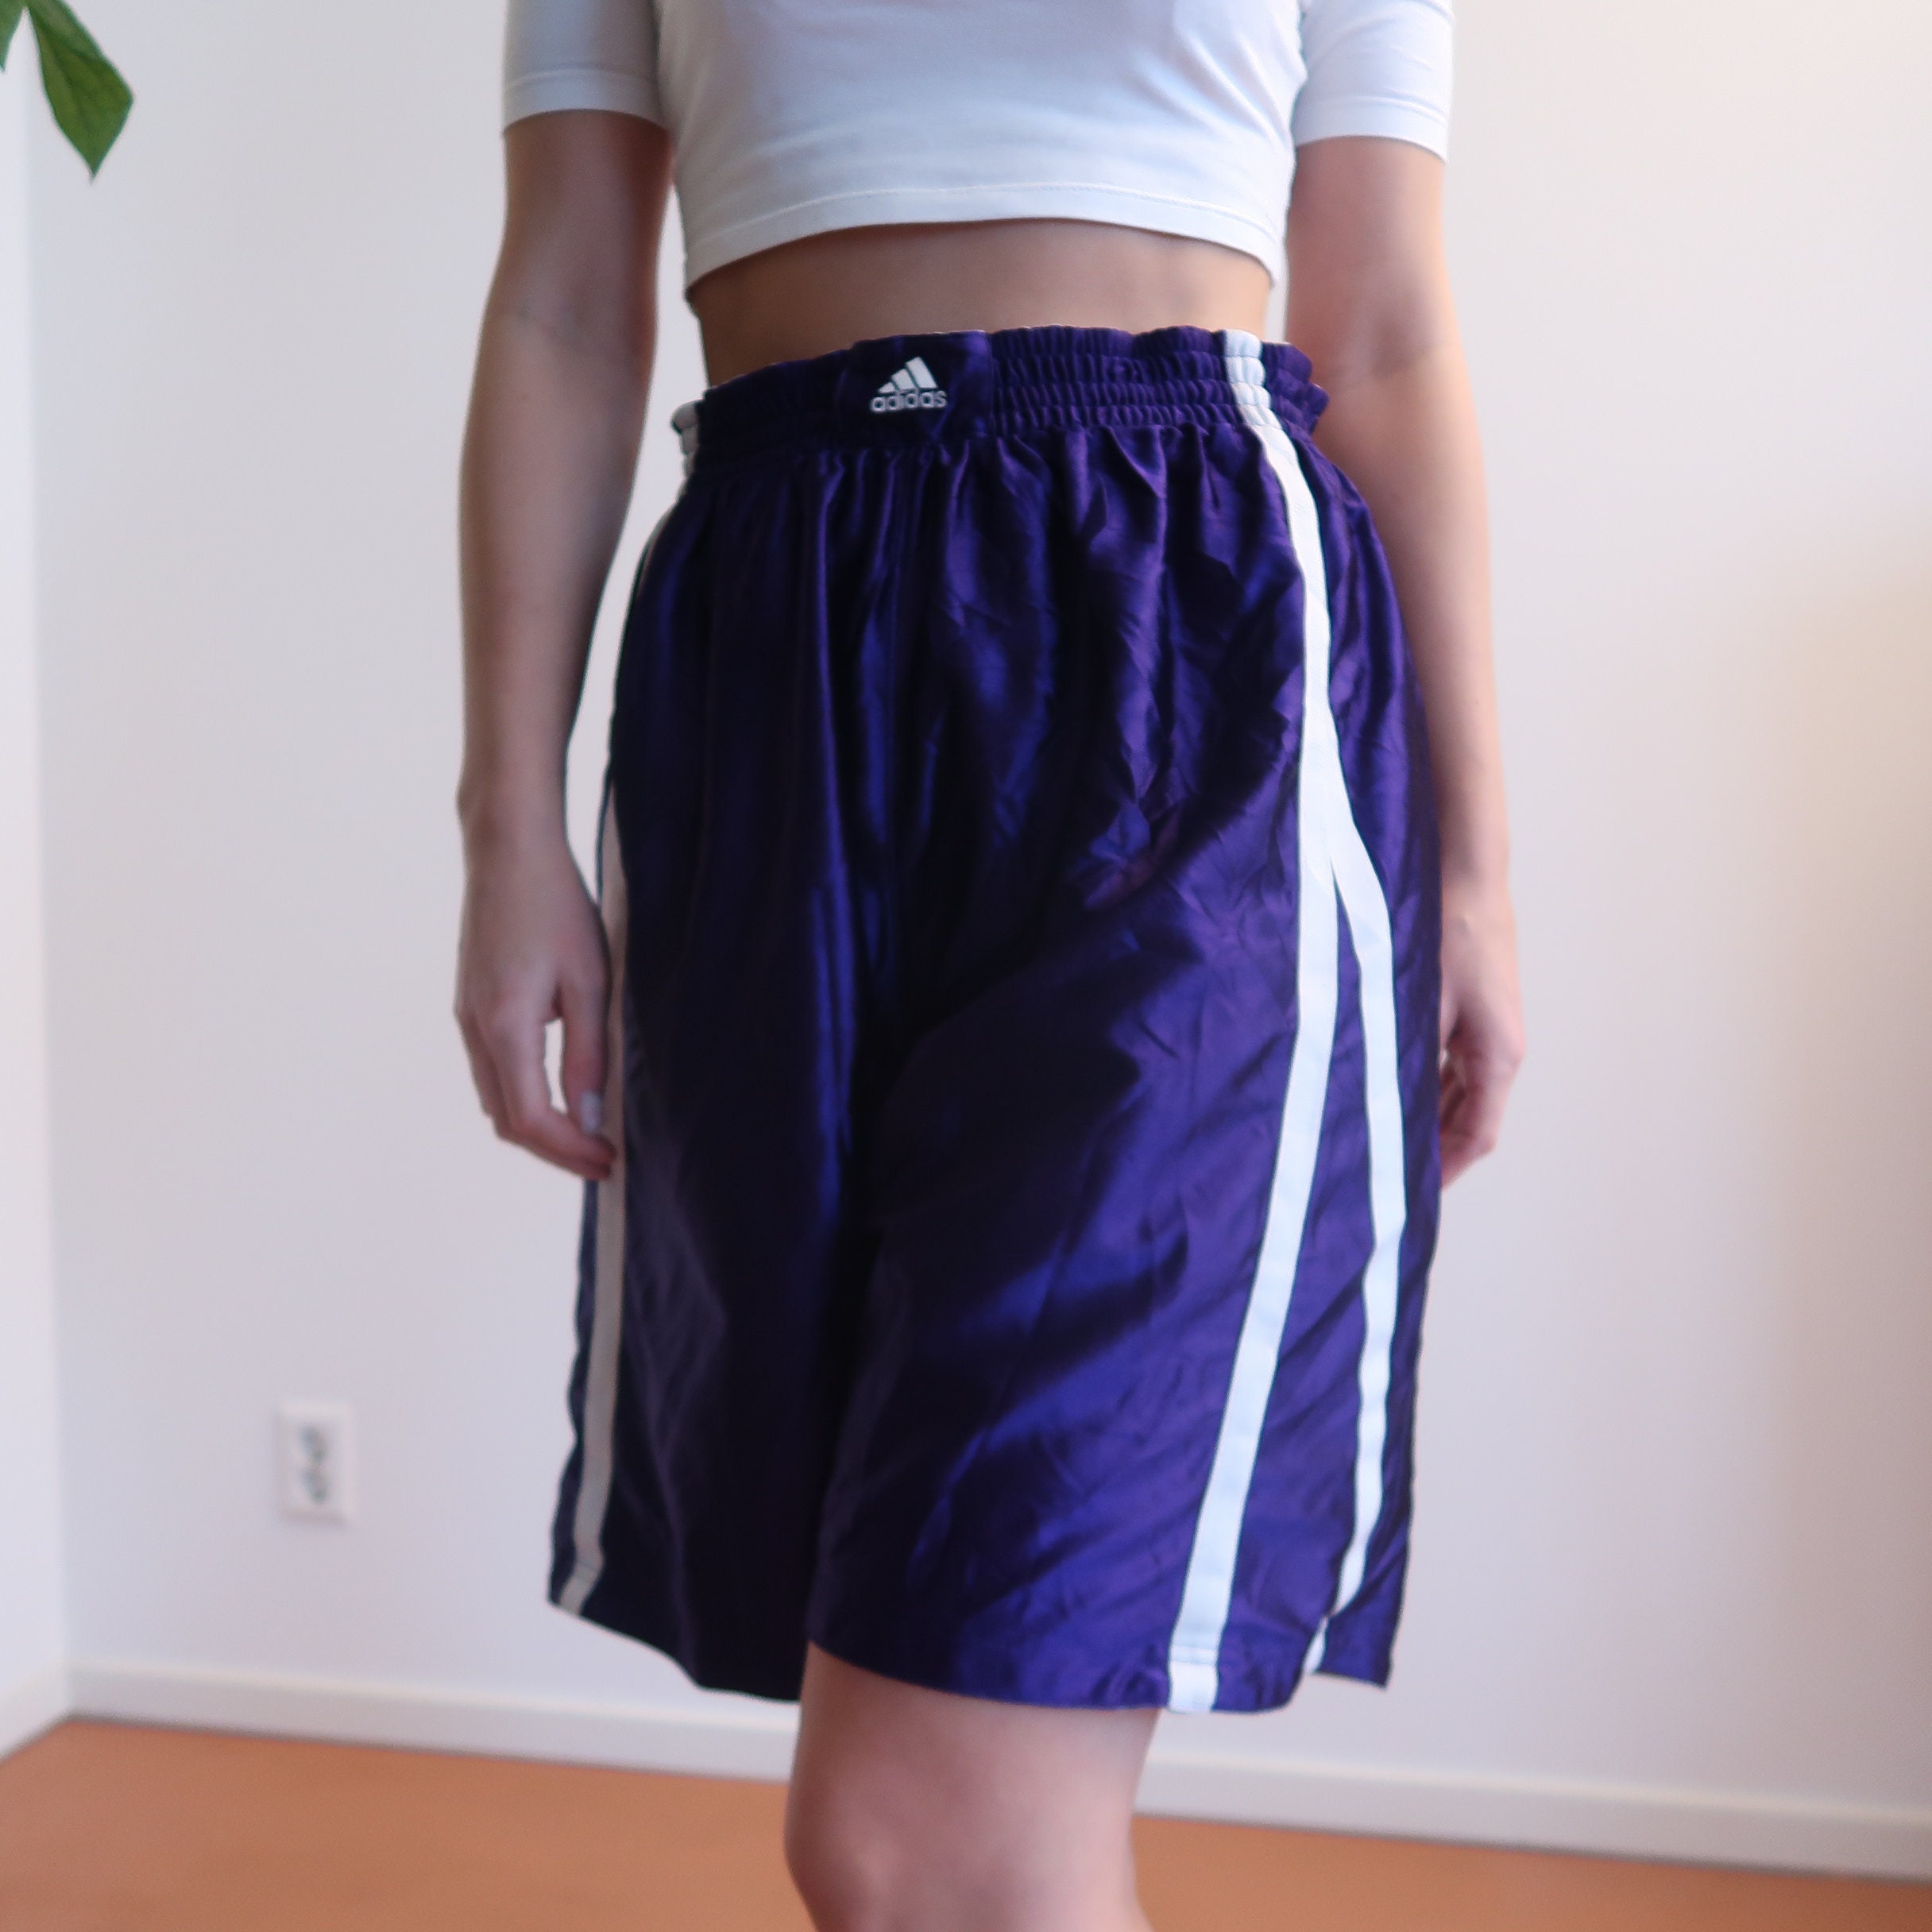 NBA Shorts for Men for sale